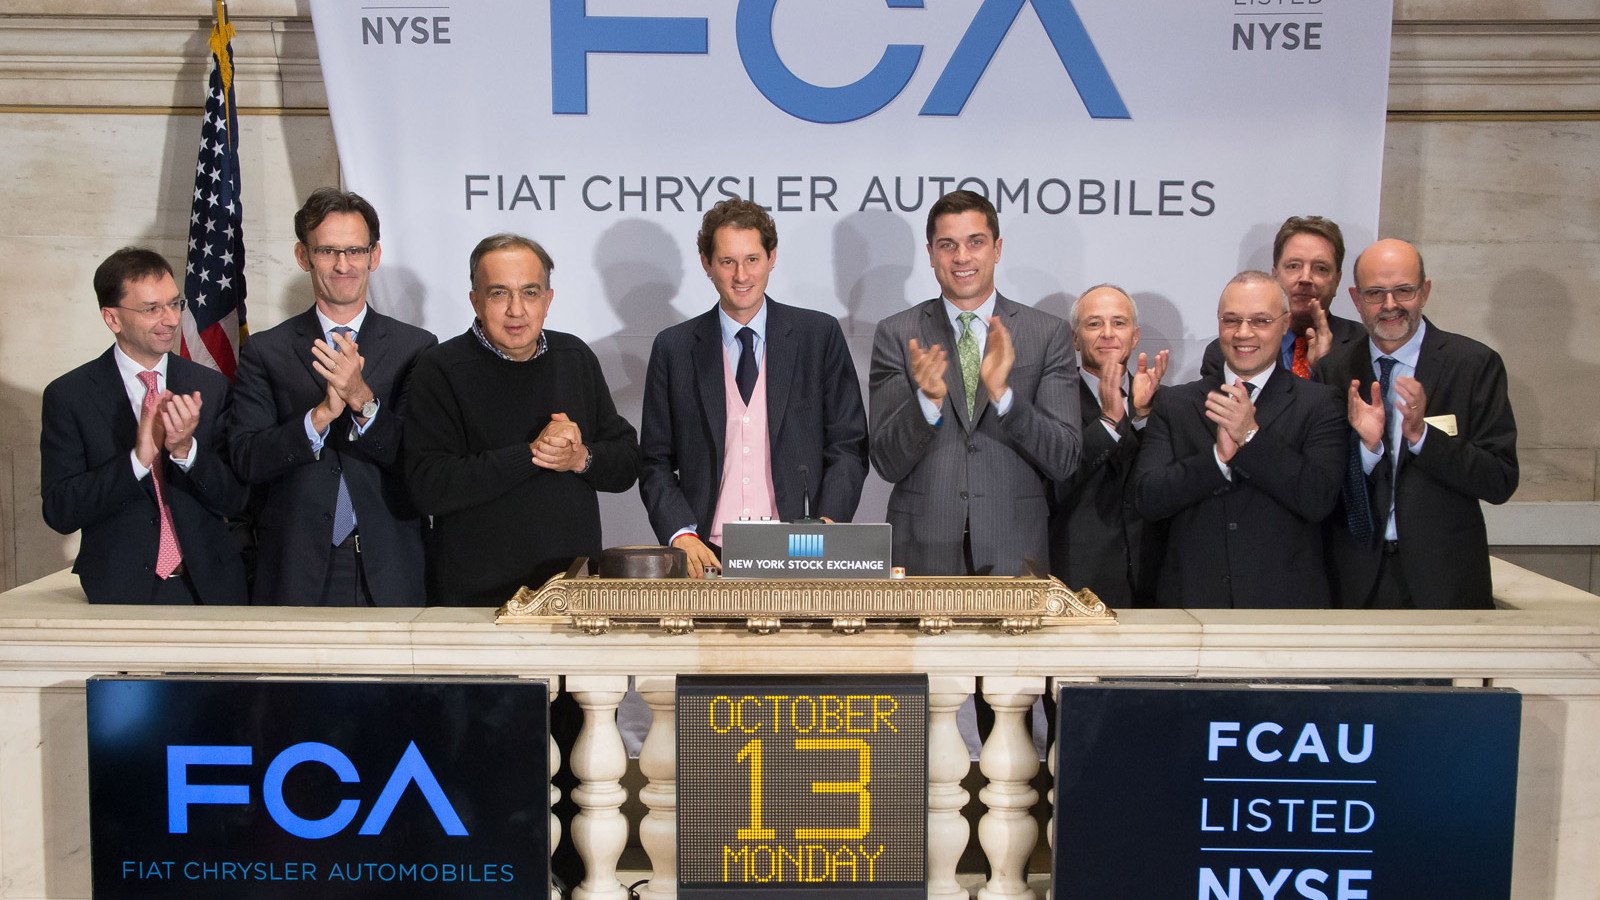 Fiat Chrysler Automobiles starts trading on the New York Stock Exchange